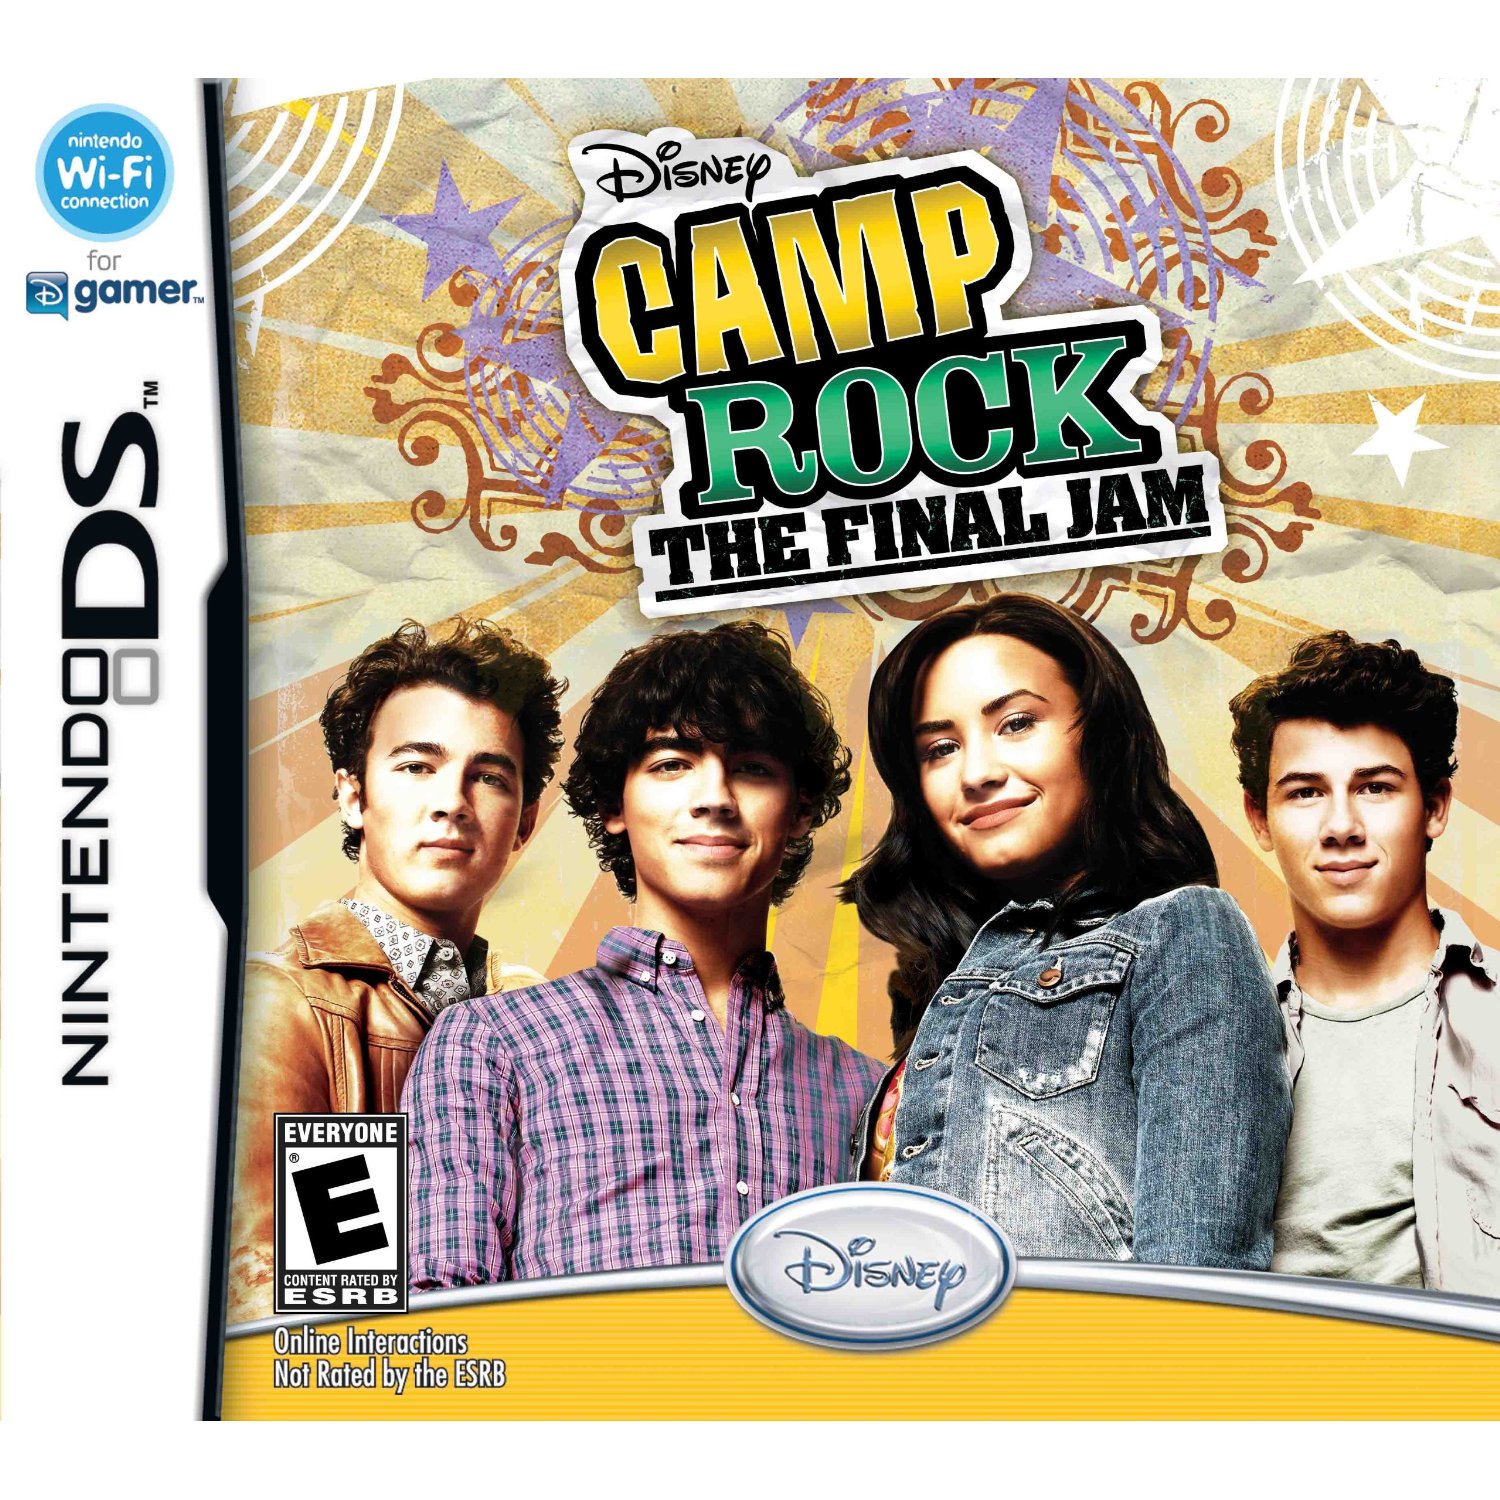 Review: Disney Camp Rock the Final Jam for Nintendo DS